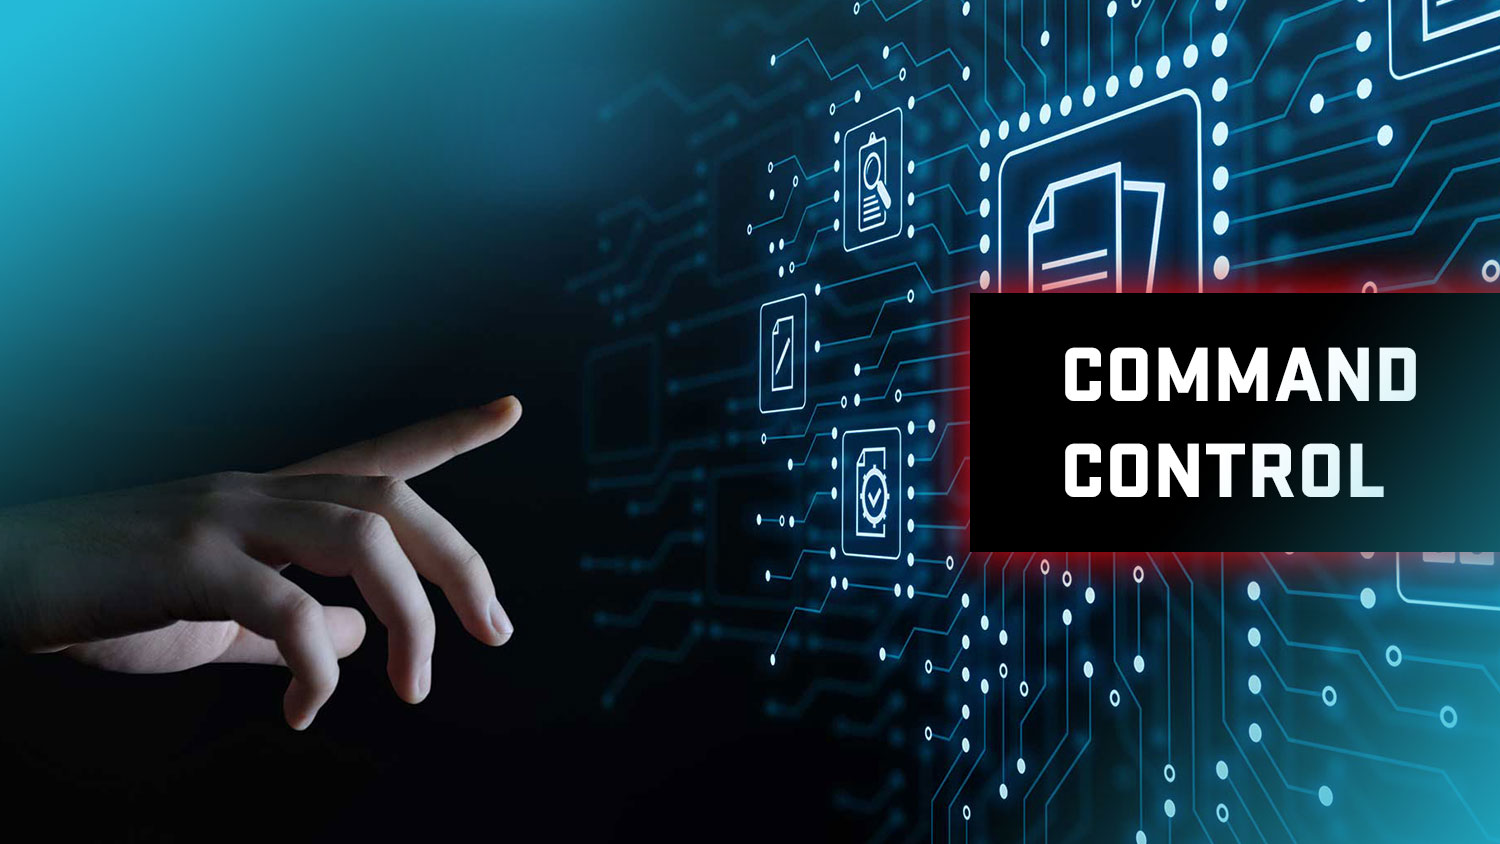 Command Control is a complete management support platform